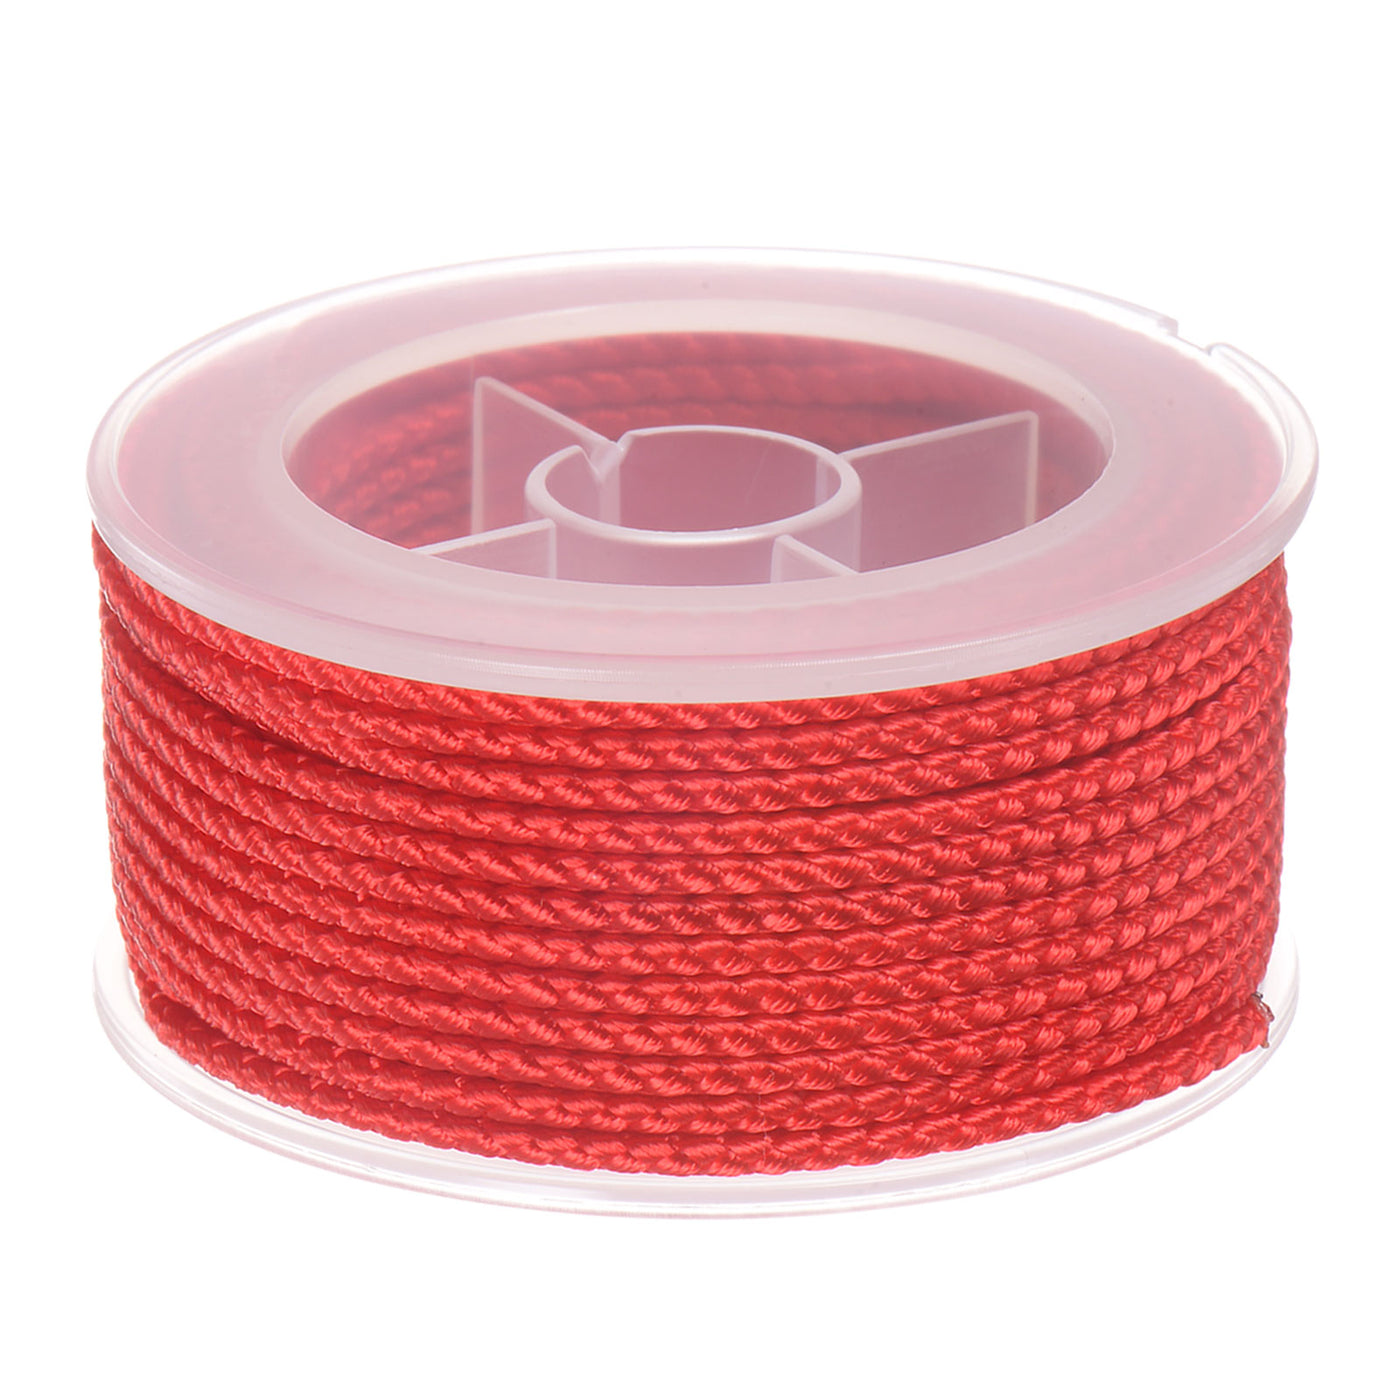 Harfington Nylon Thread Twine Beading Cord 2mm Braided String 11M/36 Feet, Red